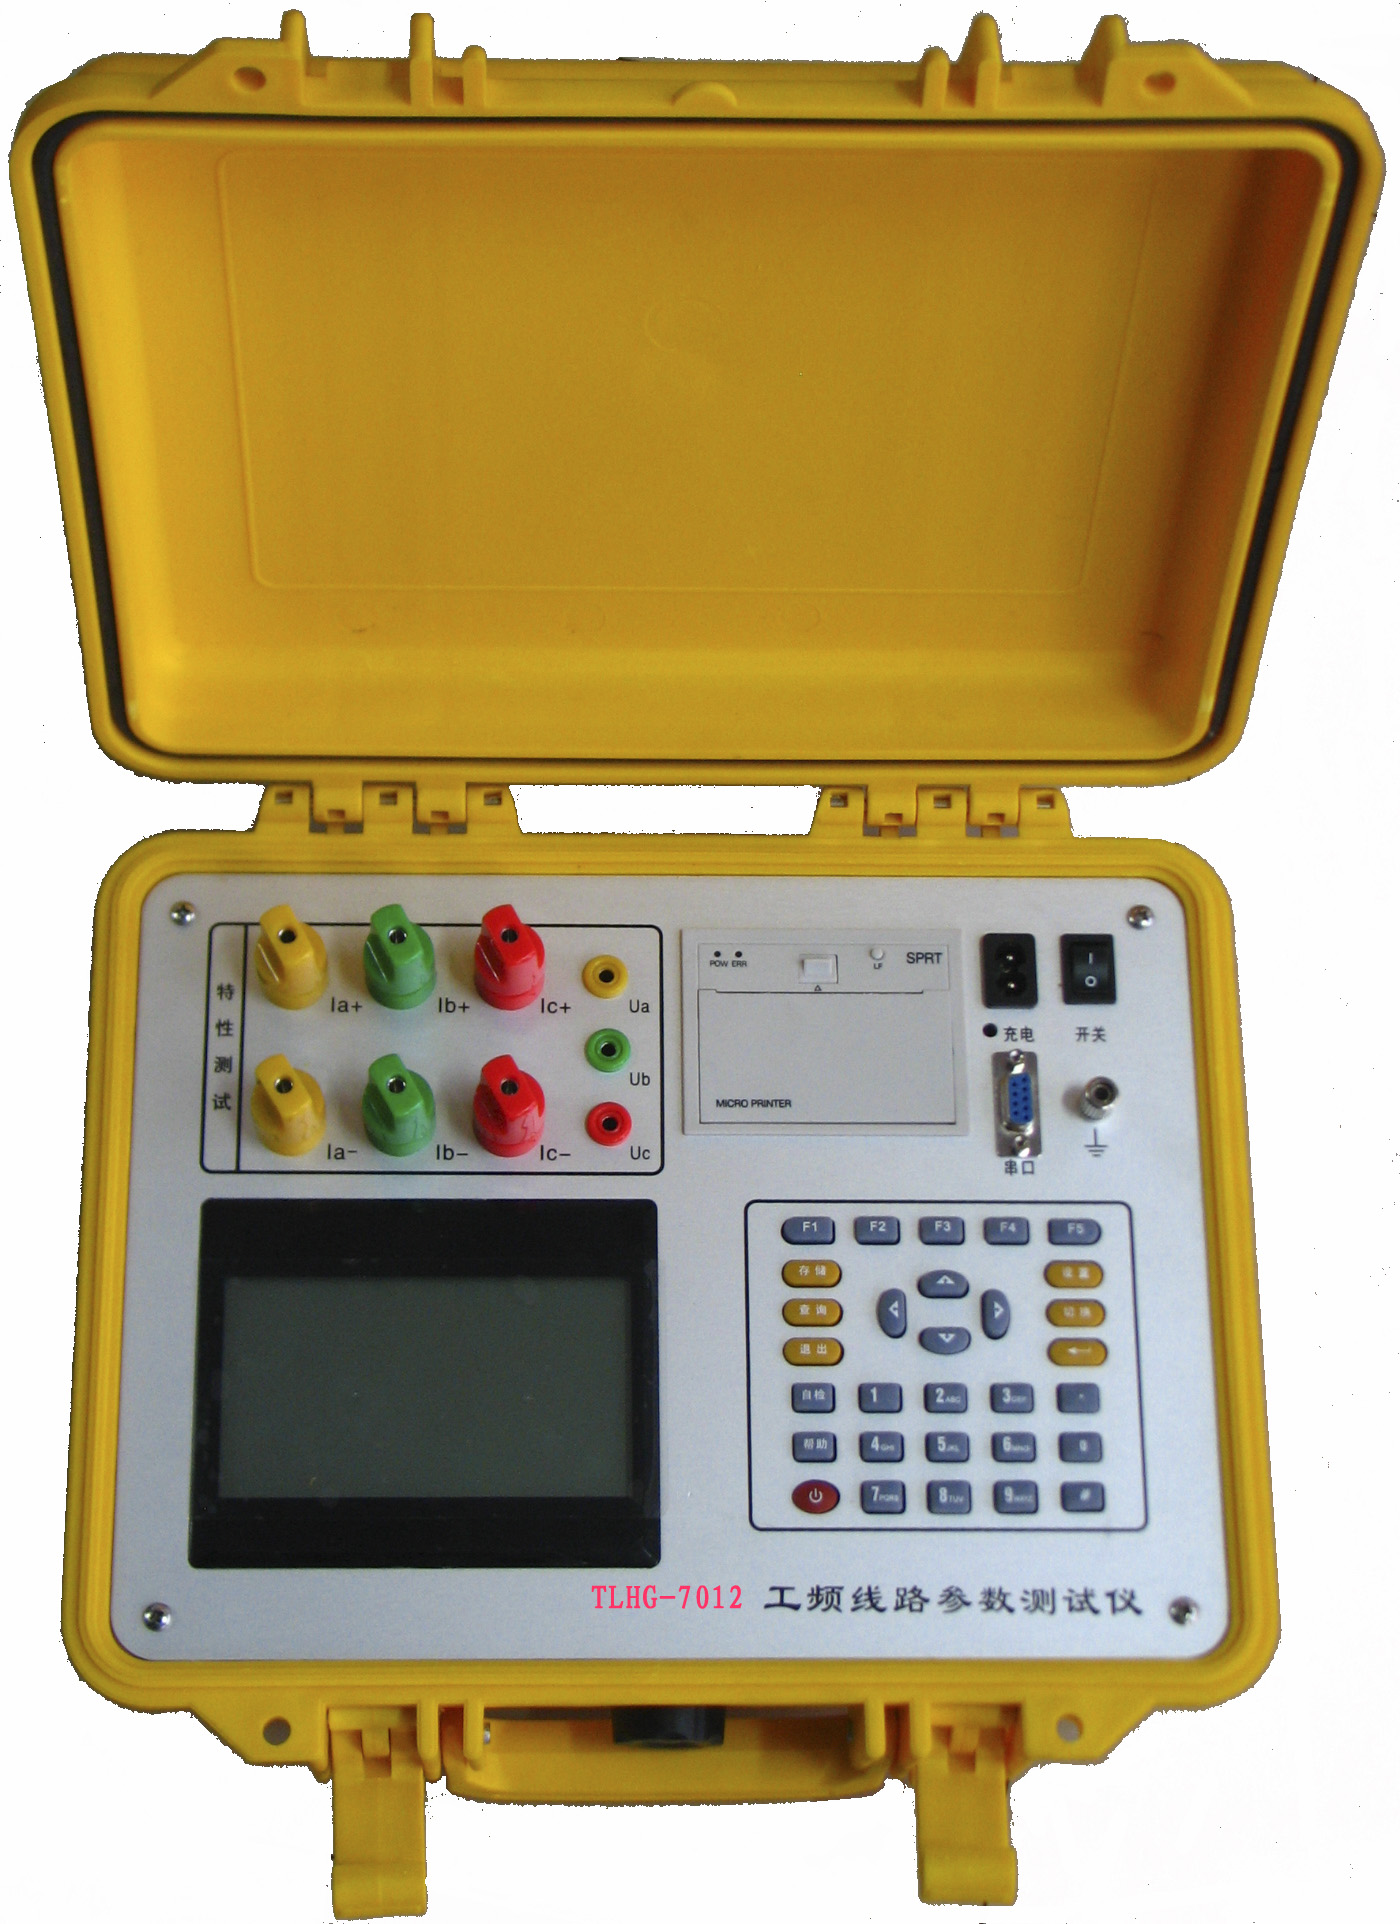 TLHG-7012工频线路参数测试仪